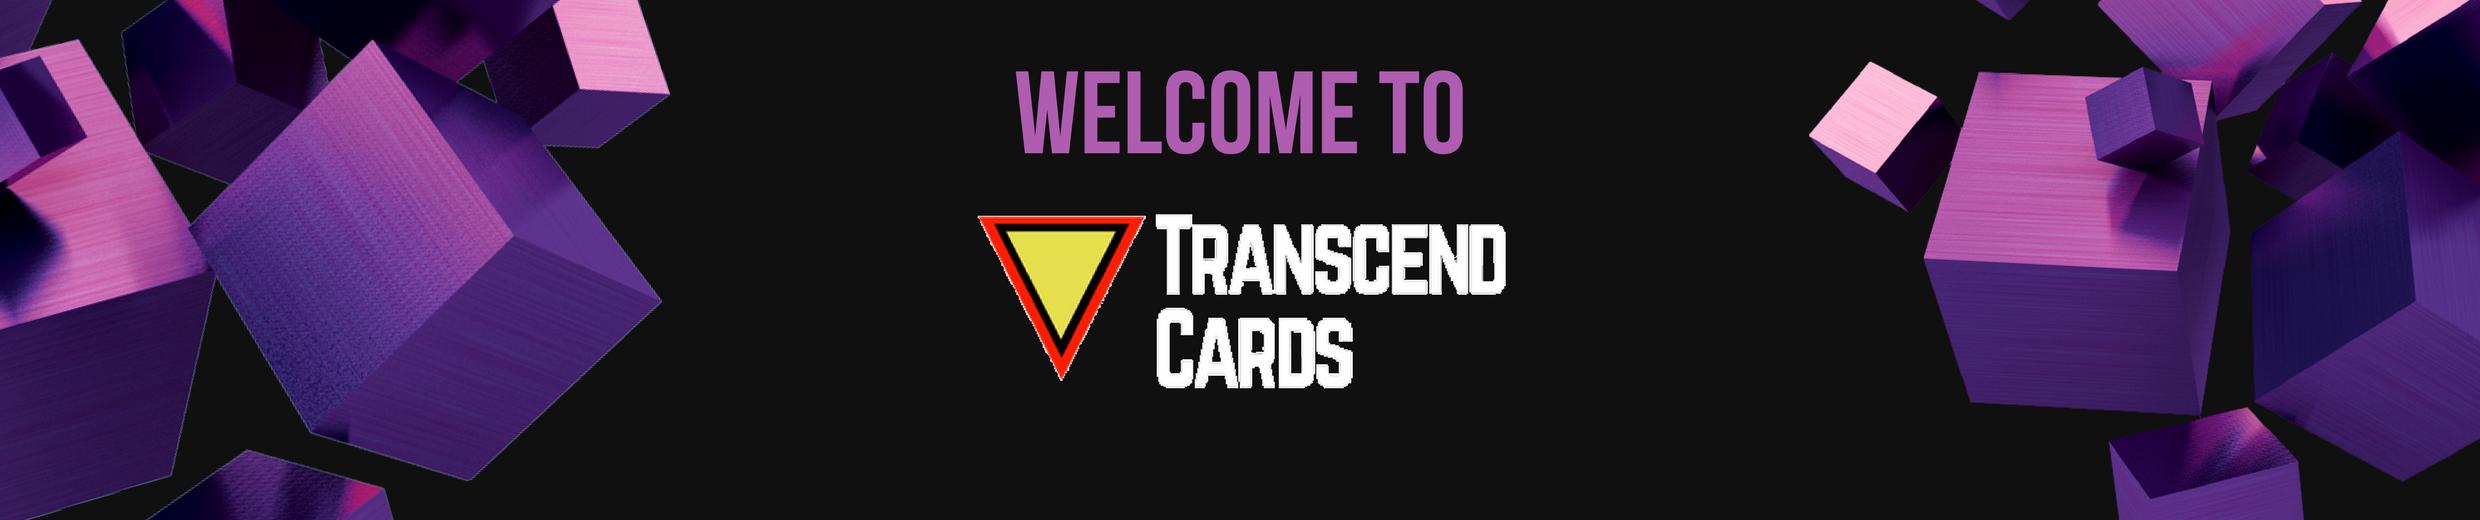 Transcend cards about us banner